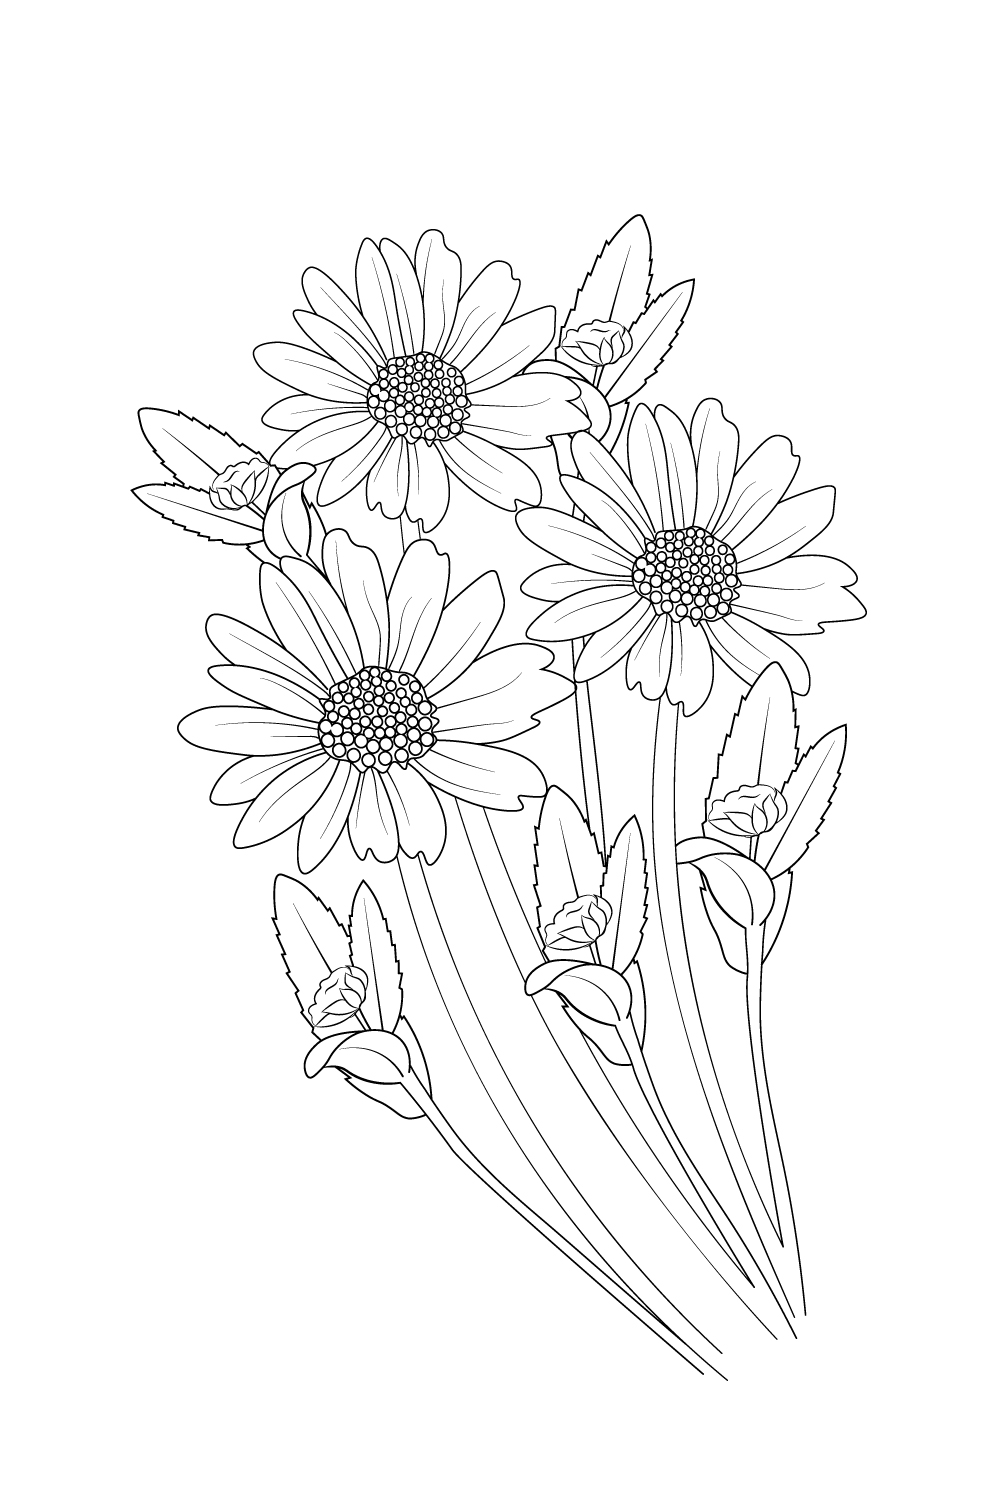 Daisy flower drawing daisy flower vector art, daisy flower vector, daisy illustration, pinterest preview image.